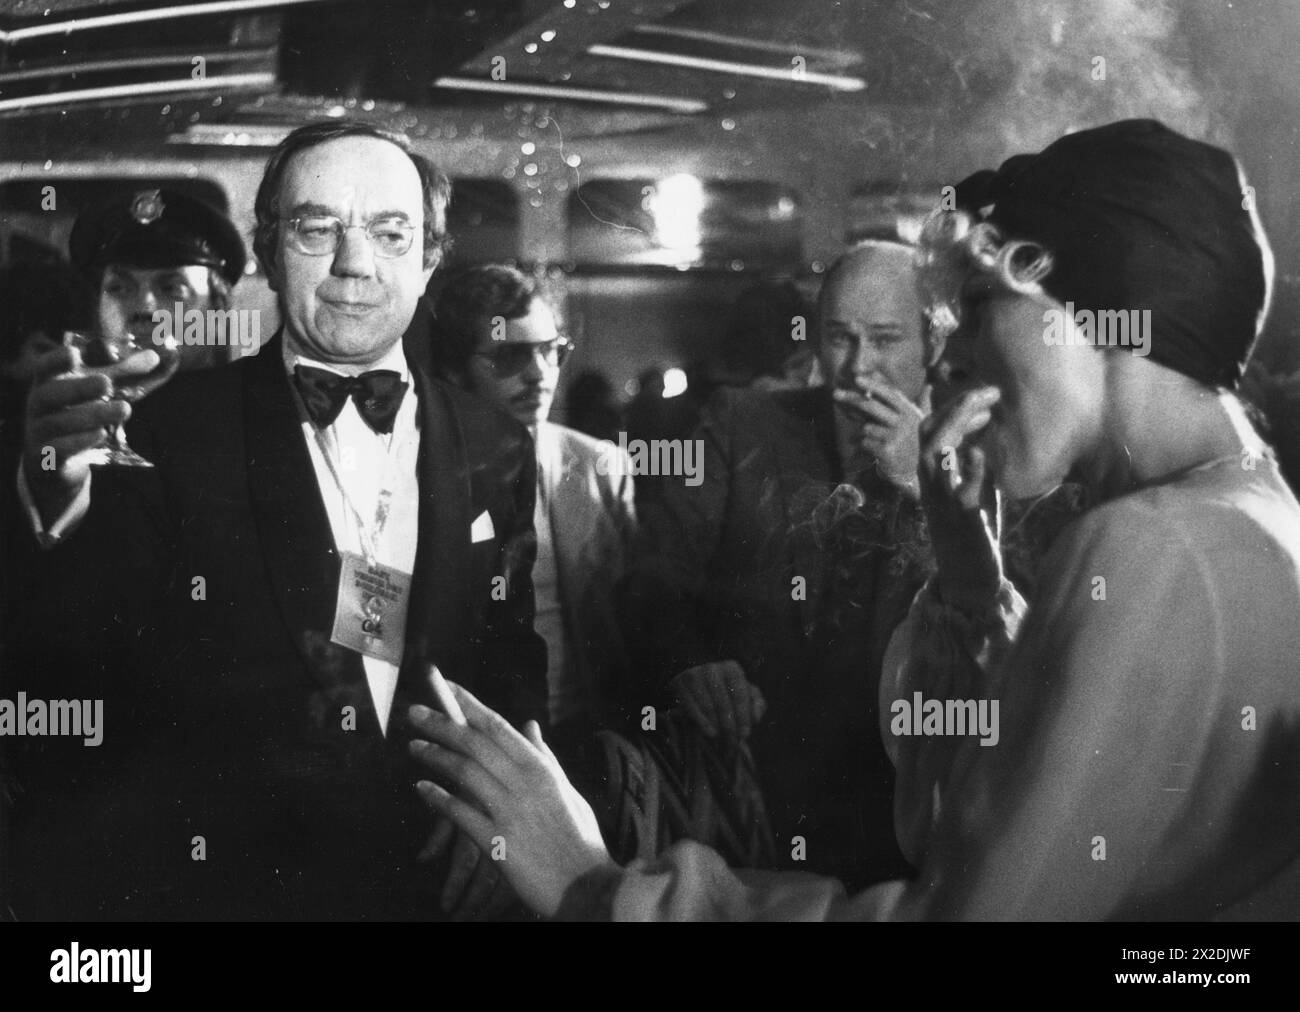 Schmidt, Eddy, deutscher Public Relations Manager, auf einer Party, Hamburg, 23.10.1972, ADDITIONAL-RIGHTS-CLEARANCE-INFO-NOT-AVAILABLE Stockfoto